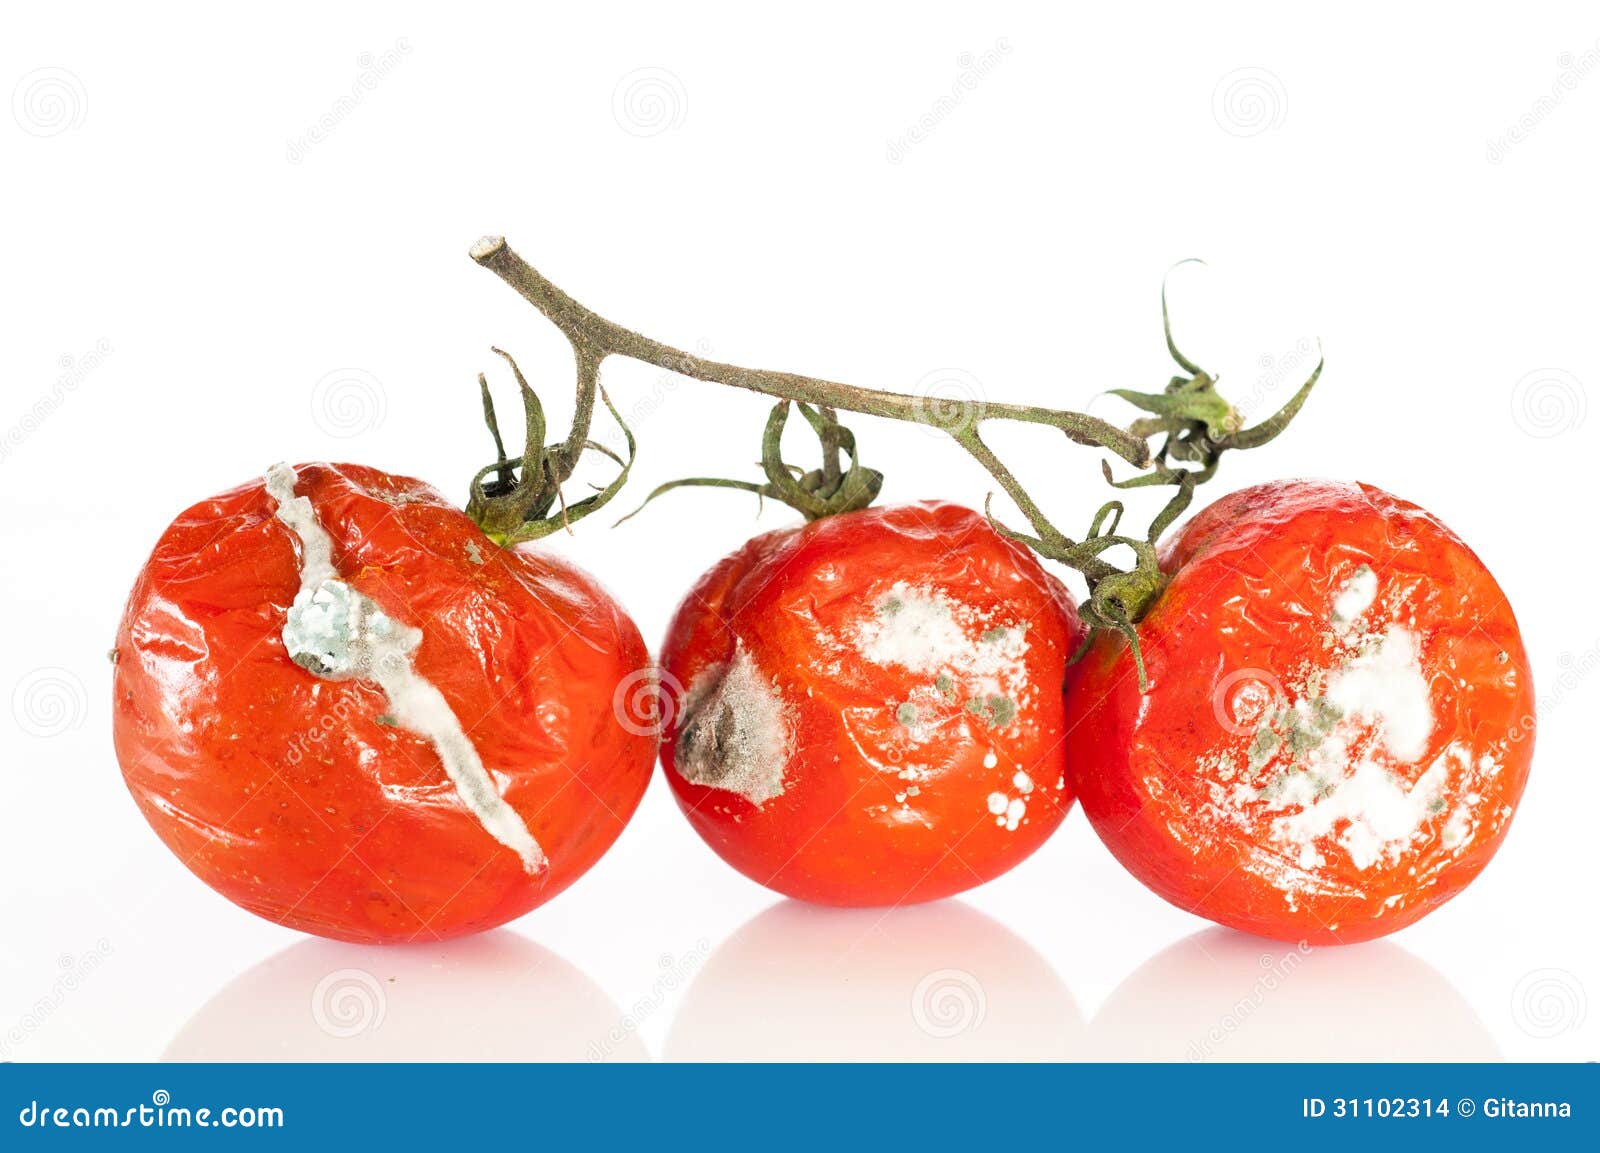 Rotten tomatoes stock photo. Image of fungus, orange - 31102314